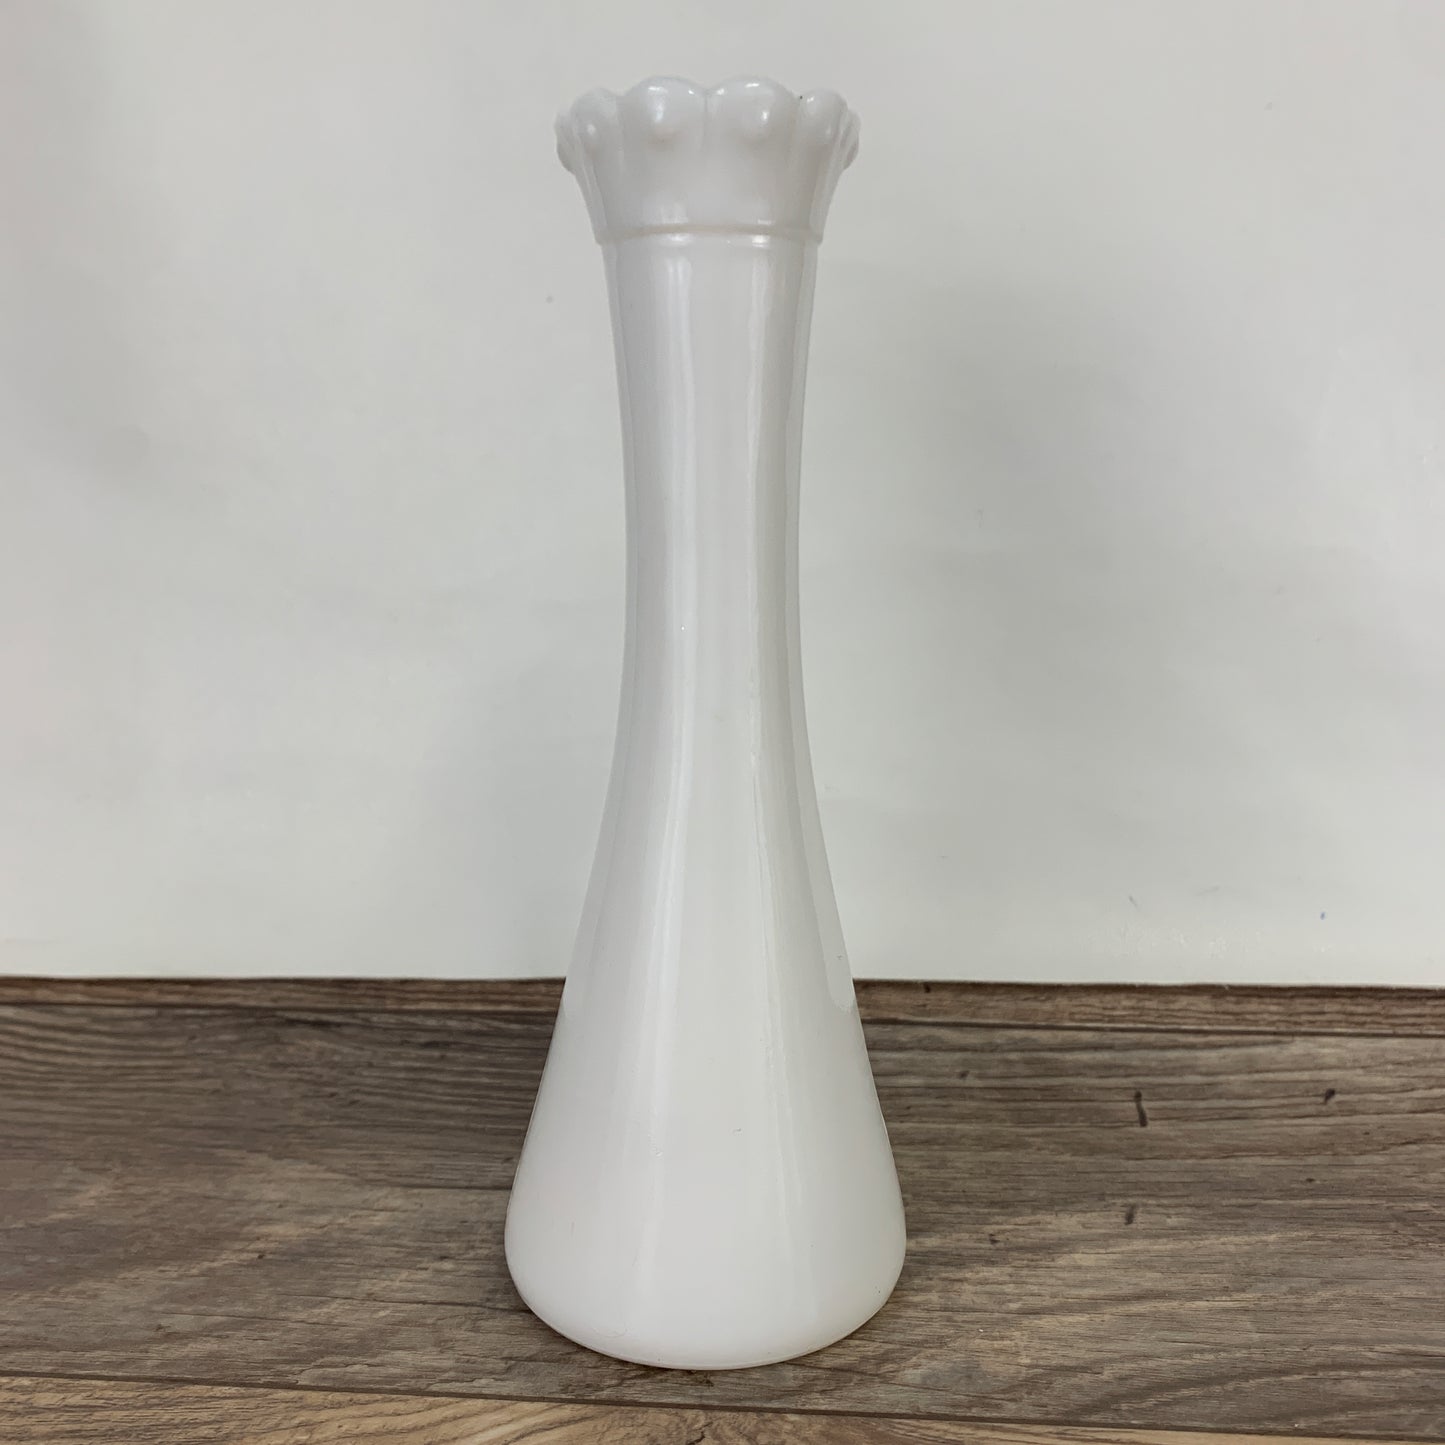 White Bud Vase with Scalloped Rim, Vintage Milk Glass Bud Vase